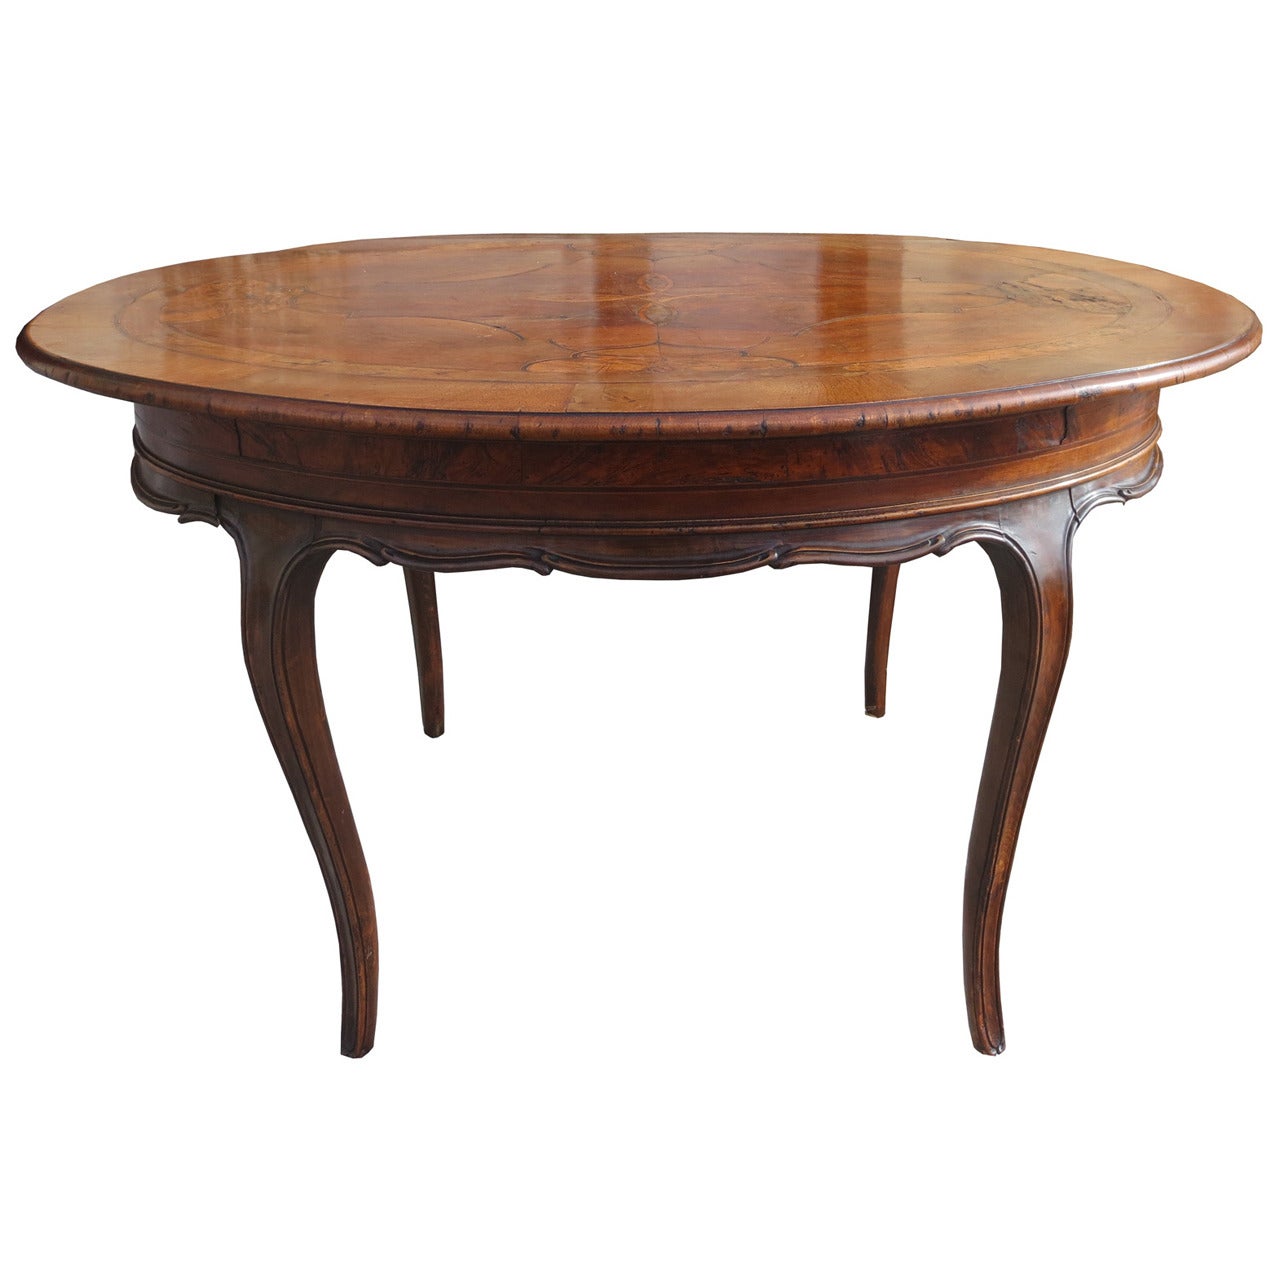 18th-19th Century, Italian Inlaid Oval Walnut Table